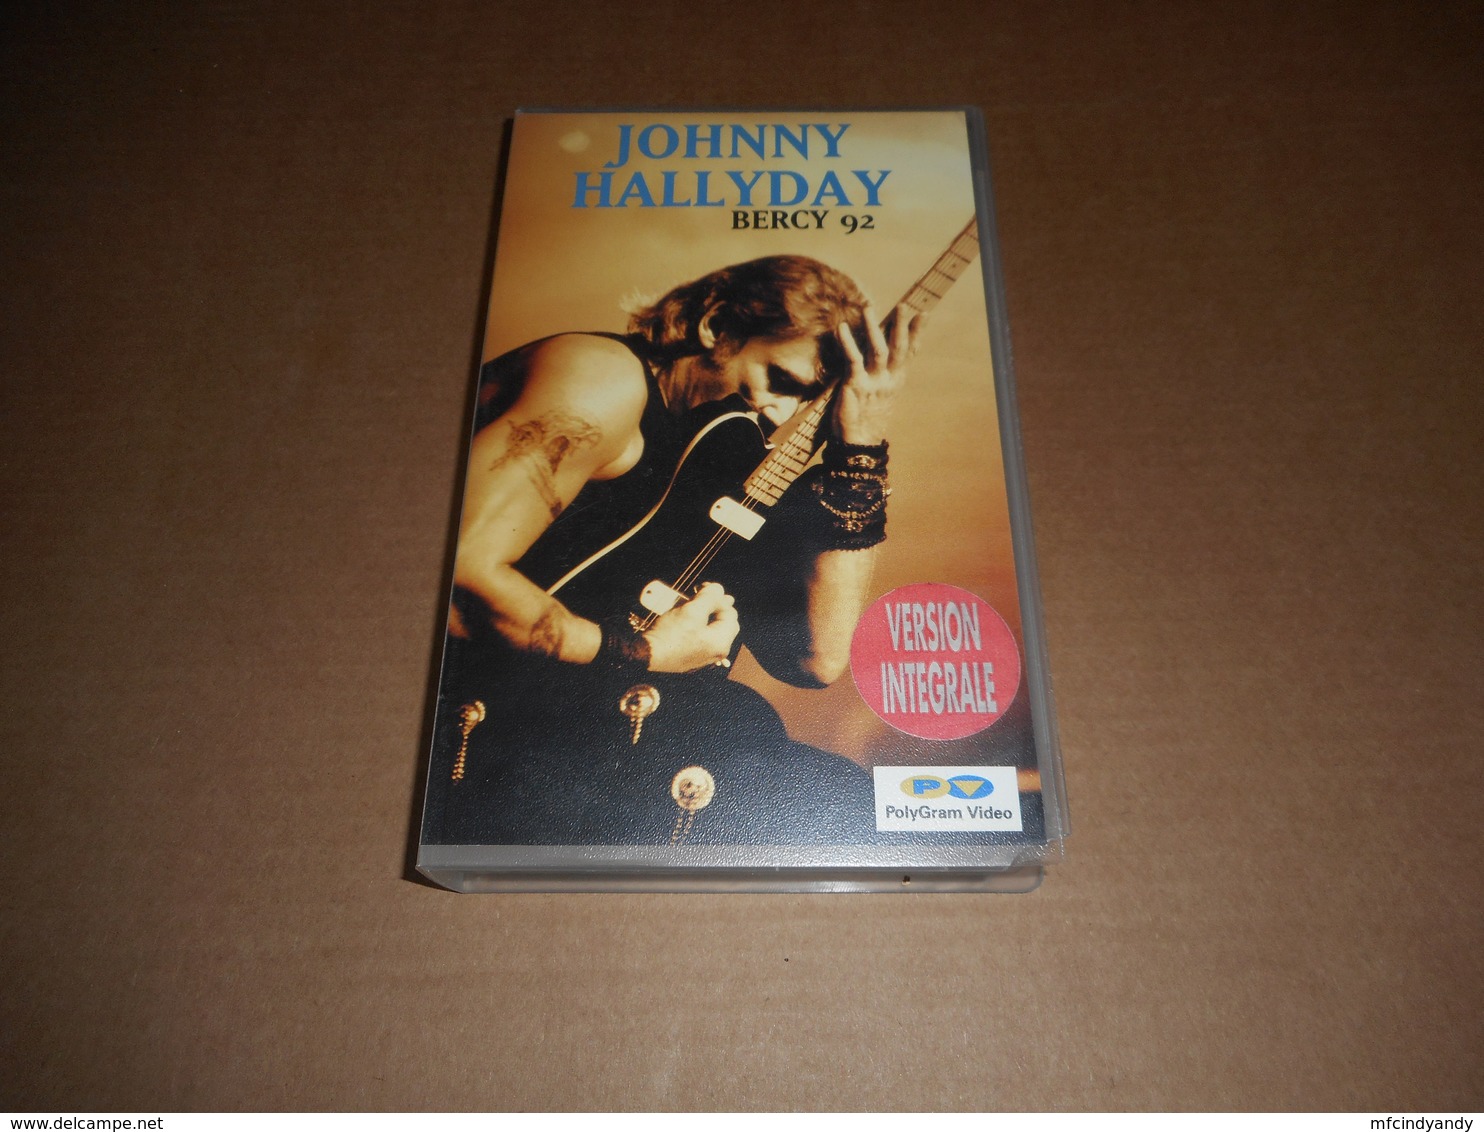 Cassette VHS - Johnny Hallyday - Bercy 92  (Version Intégrale) - Concert & Music